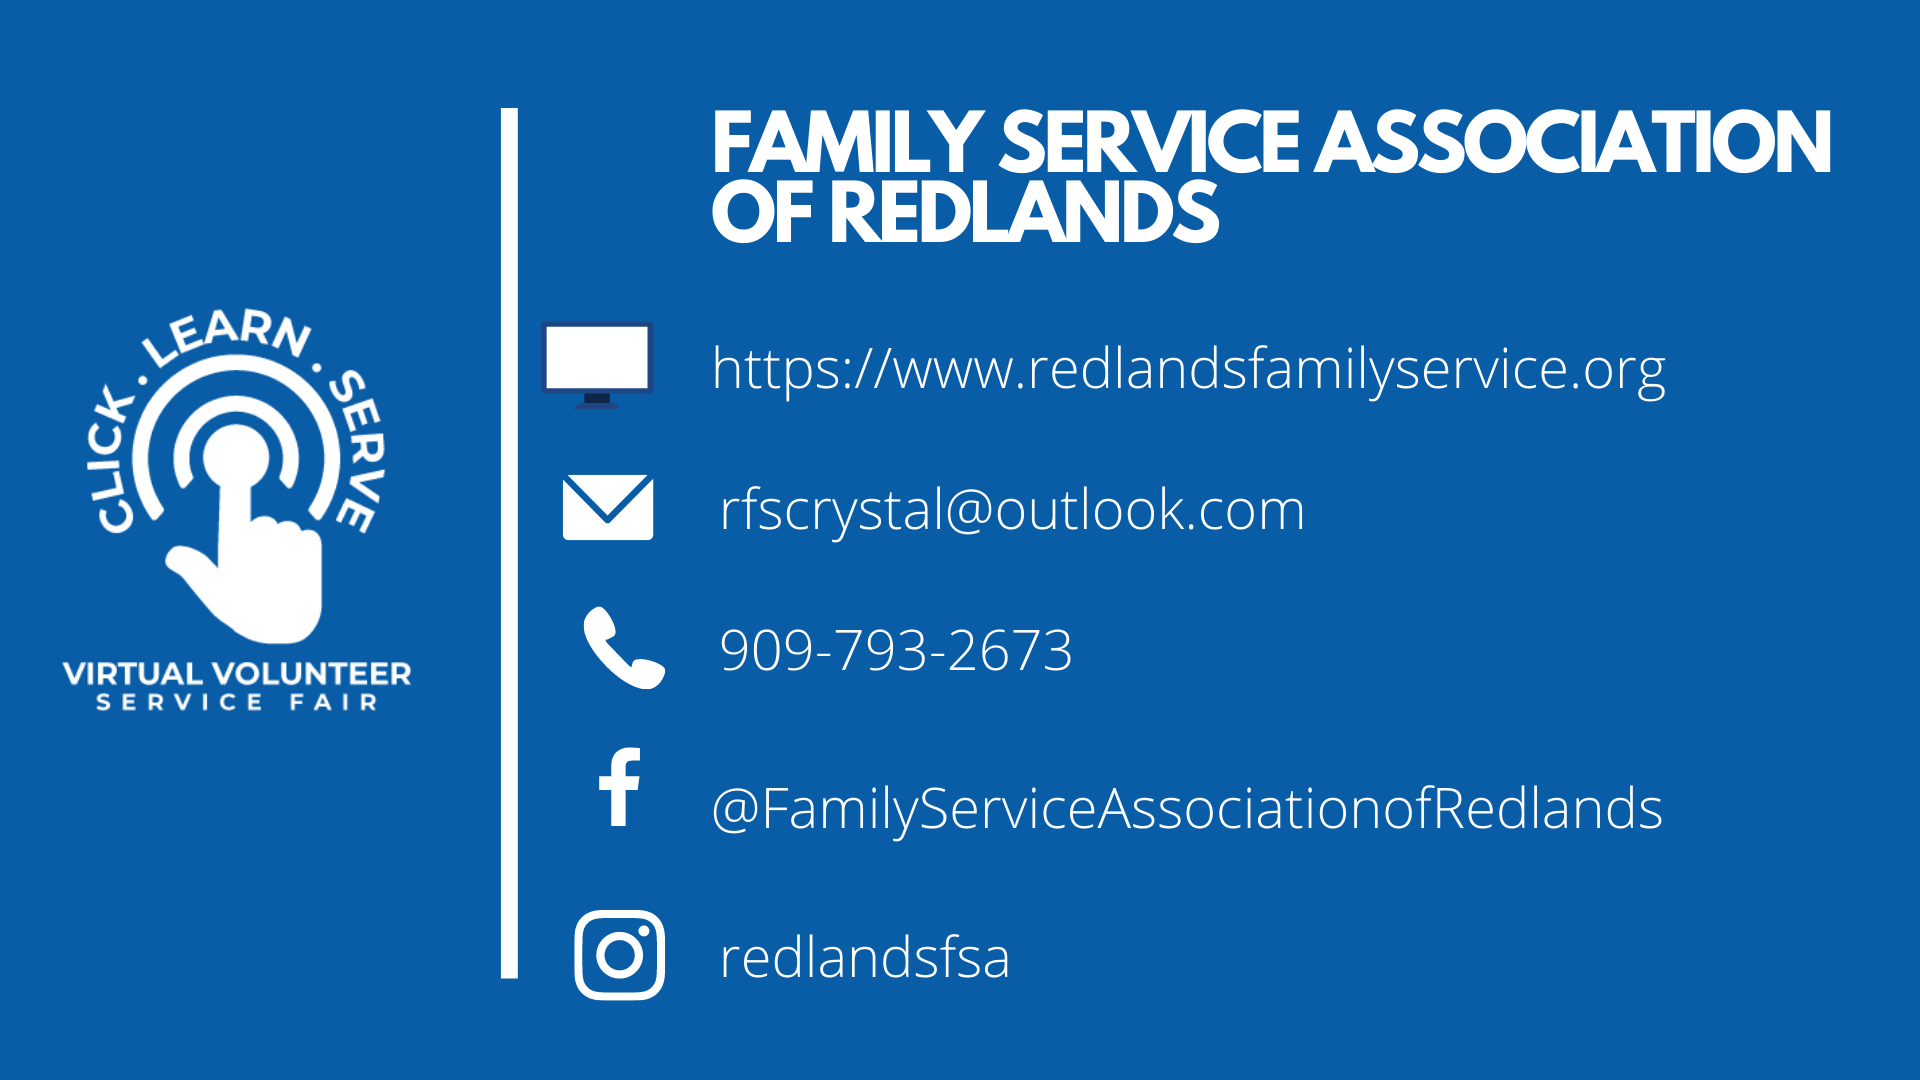 Family Service Association of Redlands nonprofit video for Virtual Volunteer Fair.